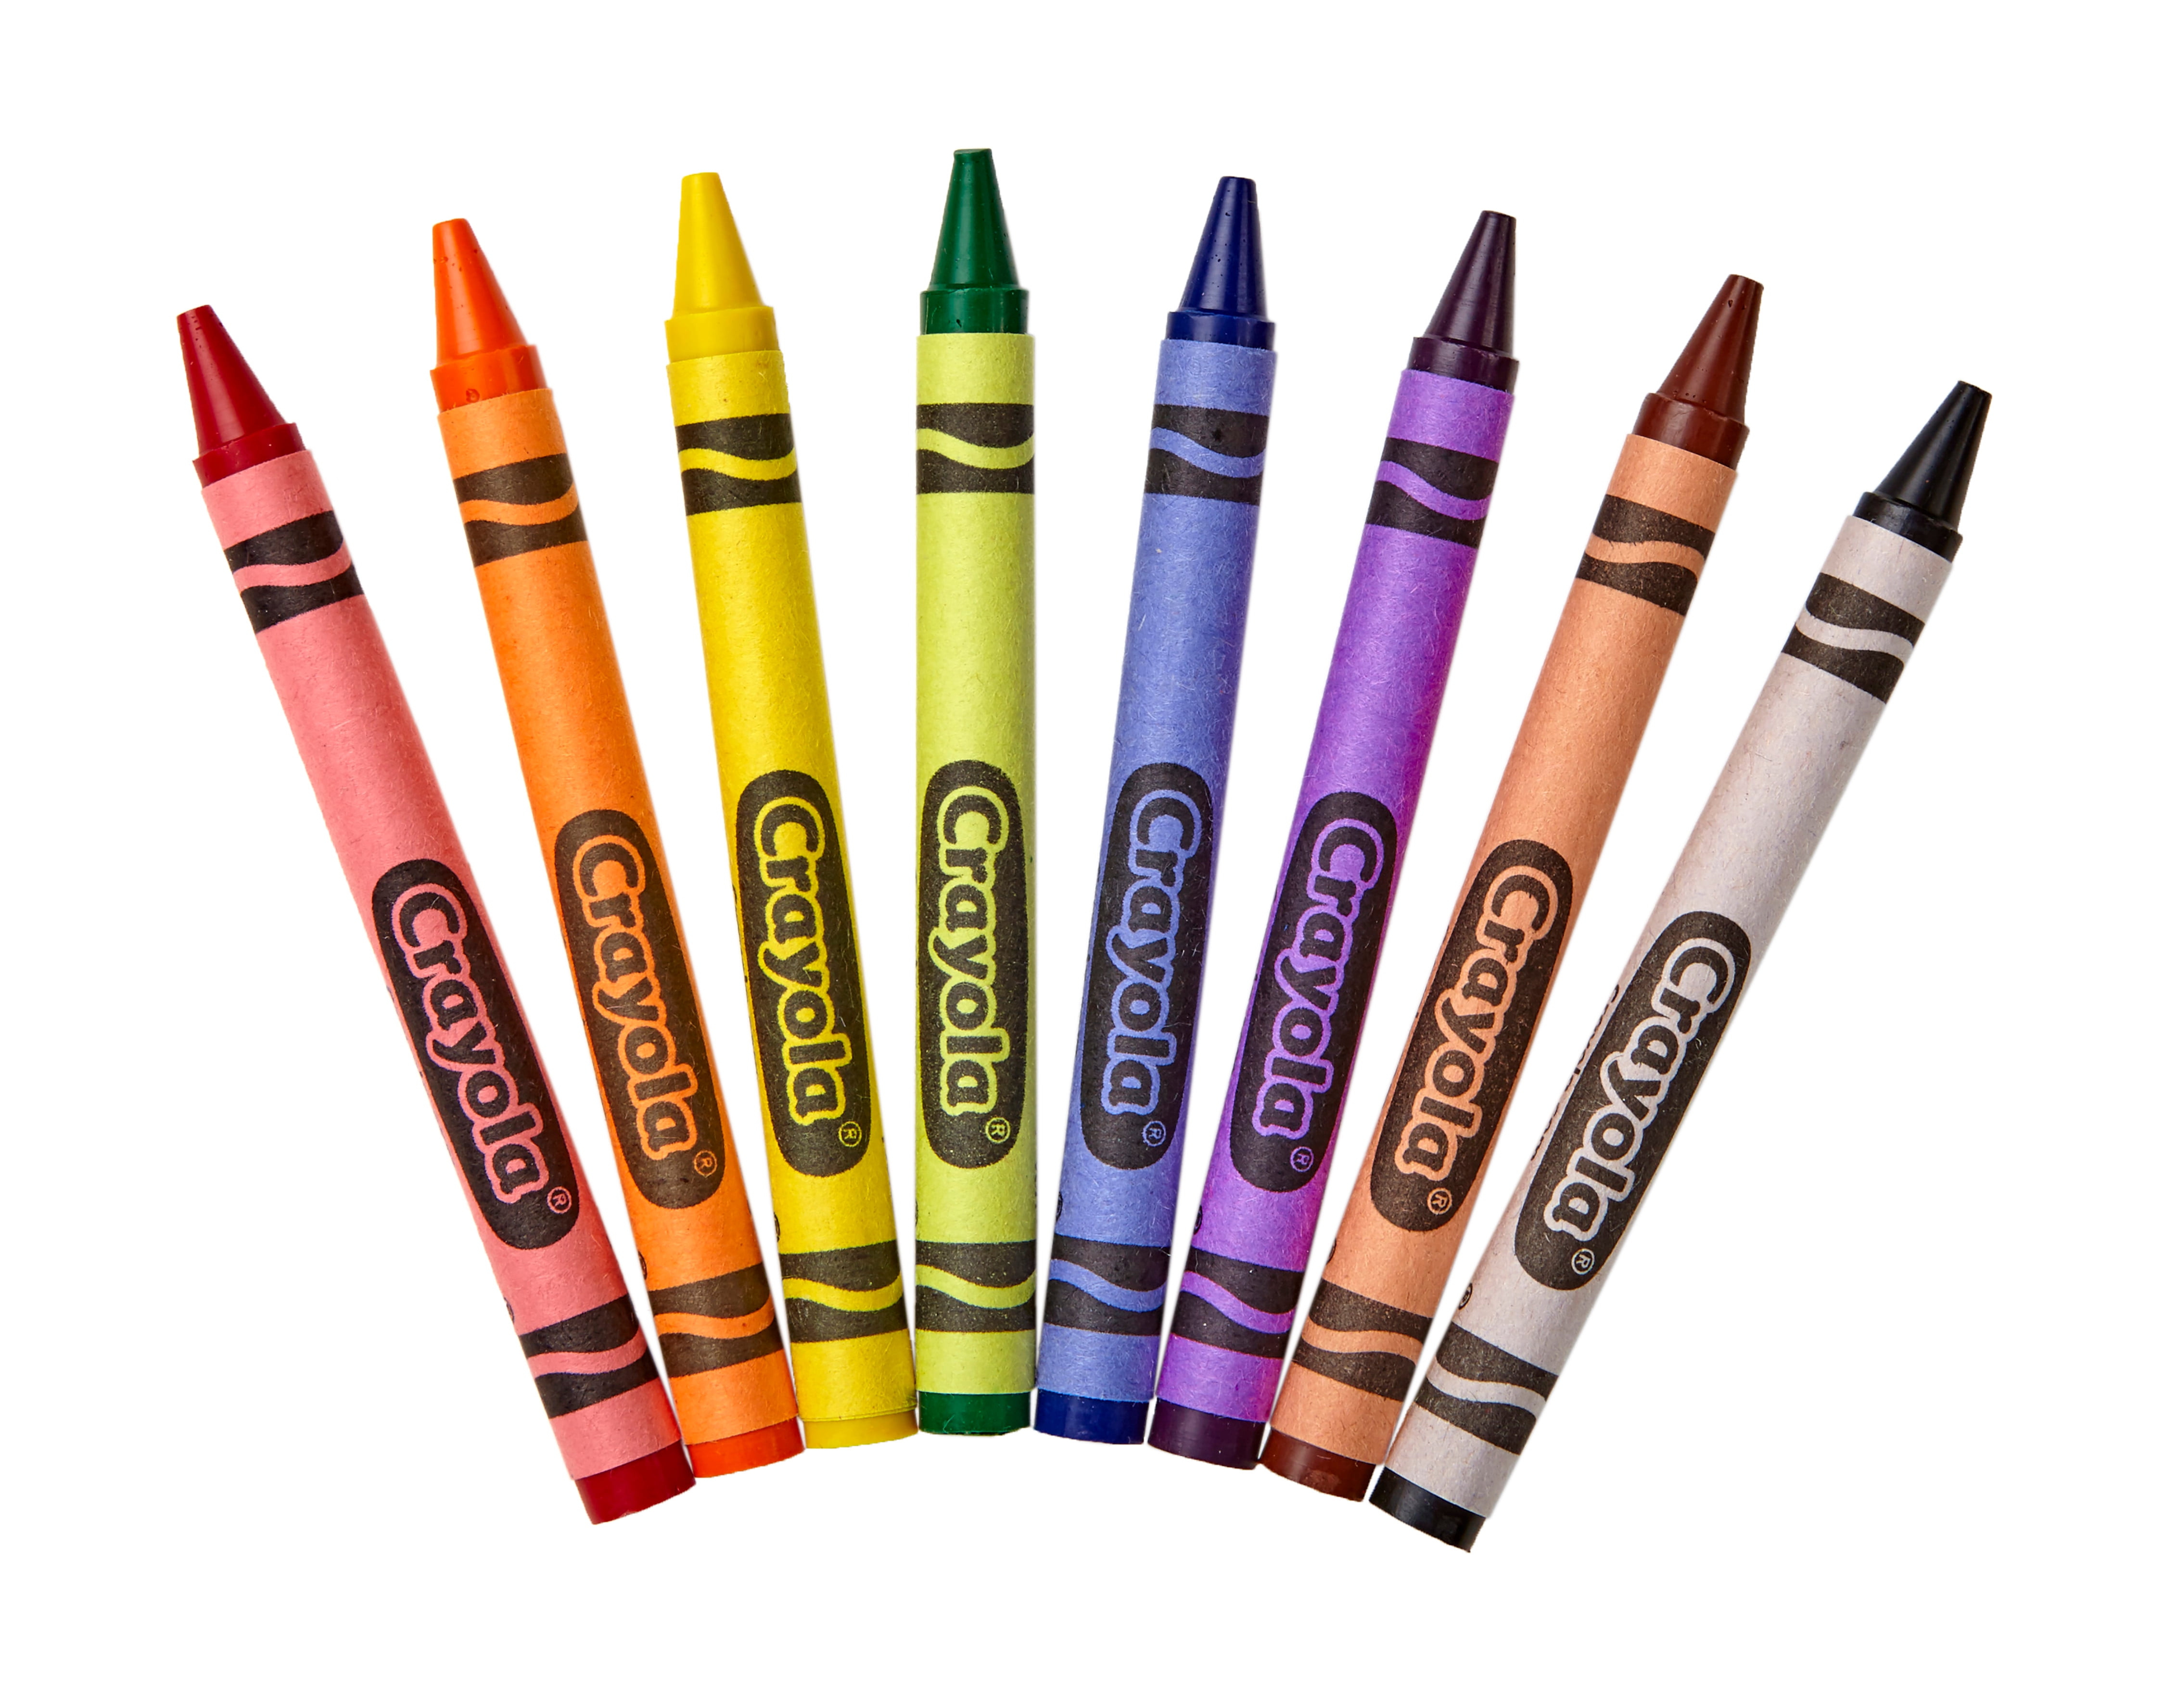  Crayola Back To School Supplies, Grades 3-5, Ages 7, 8